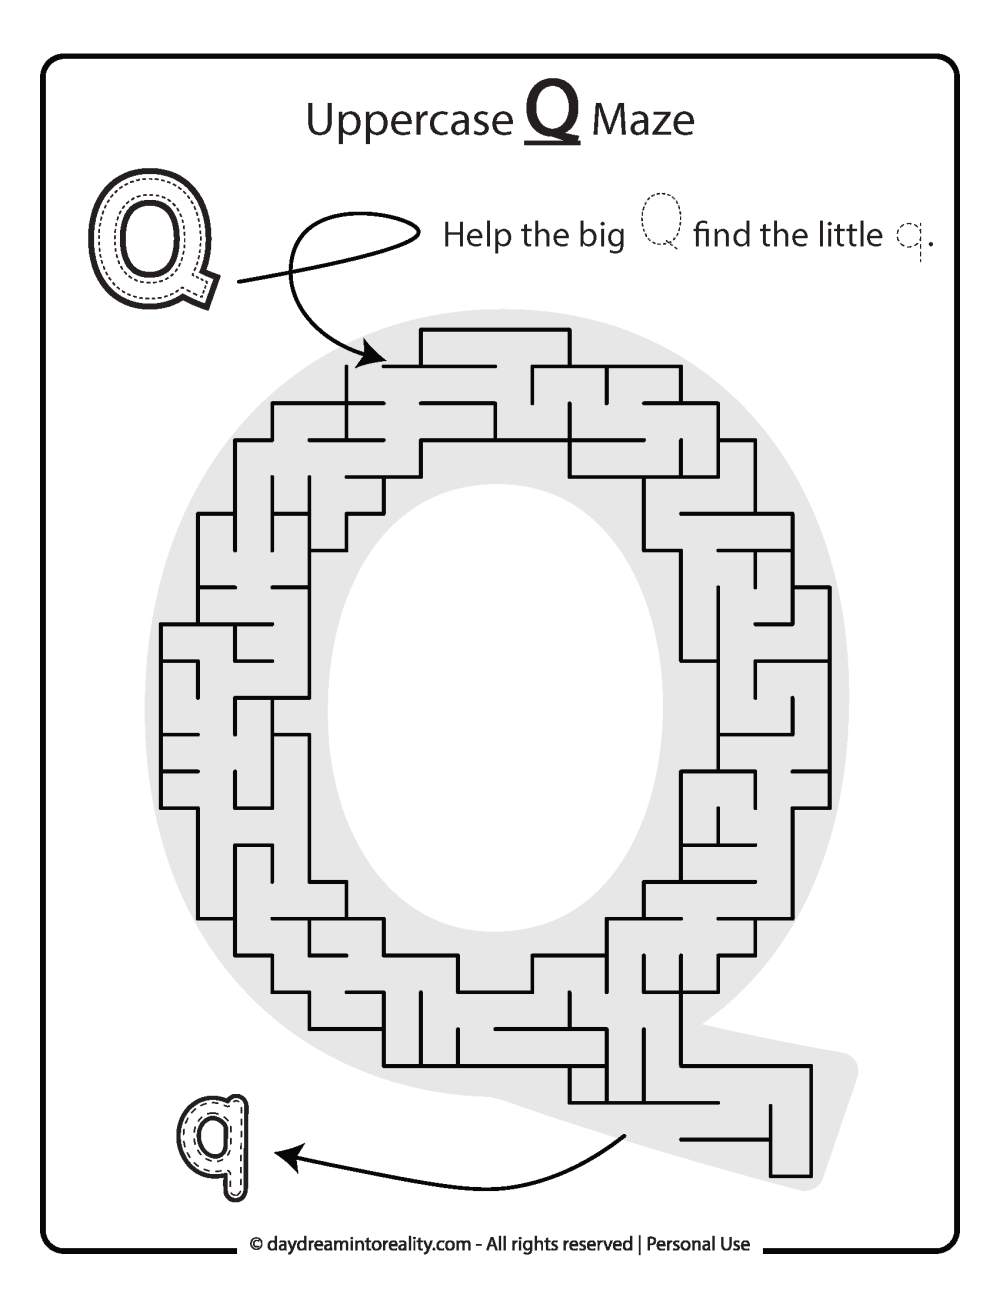 Uppercase "Q" Maze Free Printable